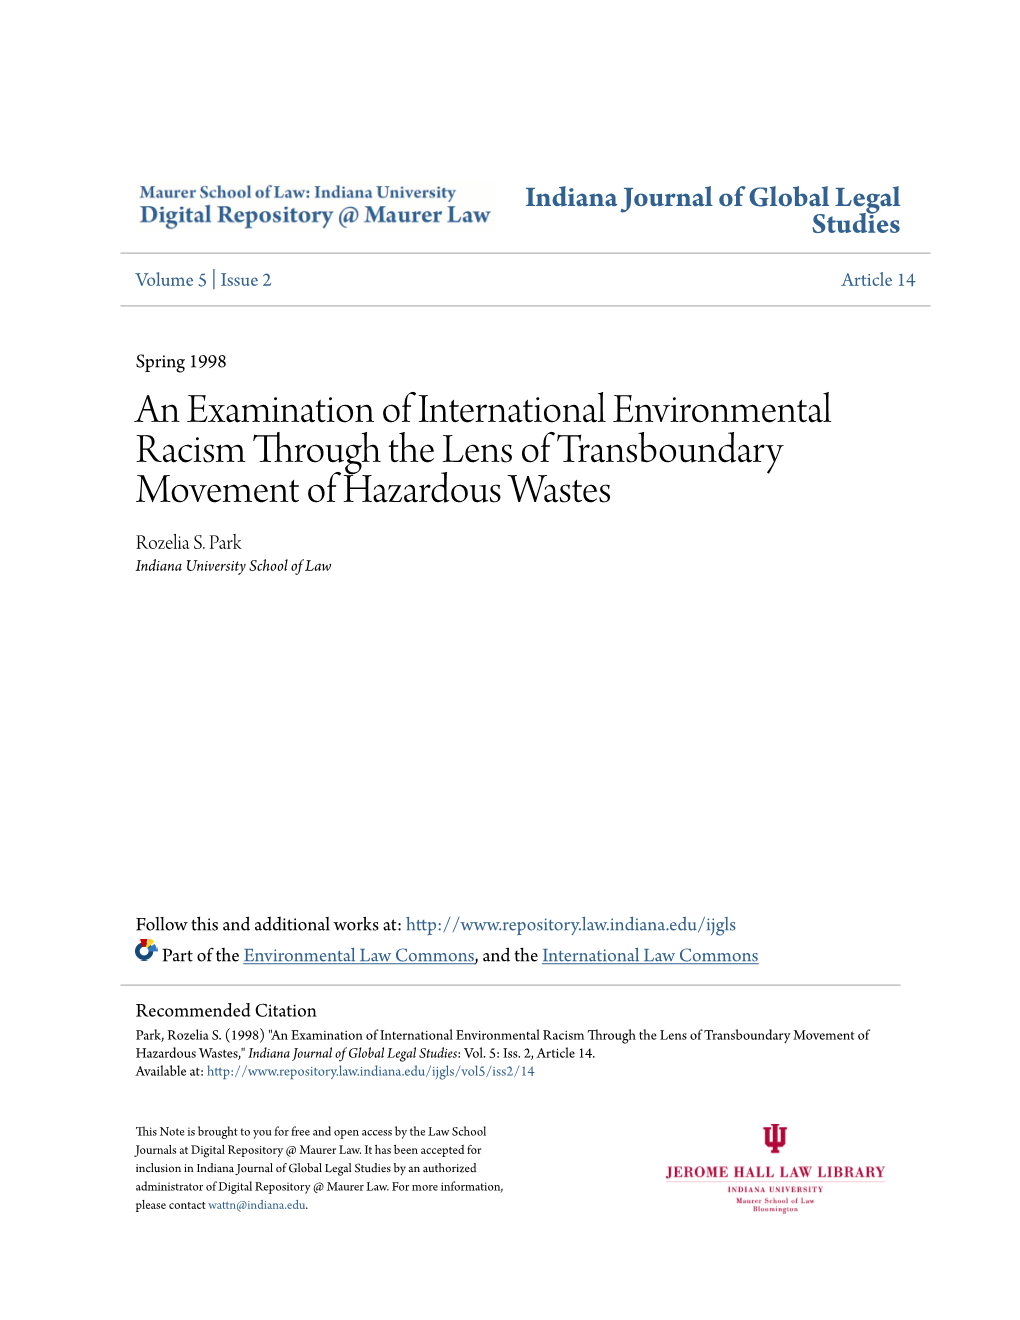 An Examination of International Environmental Racism Through the Lens of Transboundary Movement of Hazardous Wastes Rozelia S